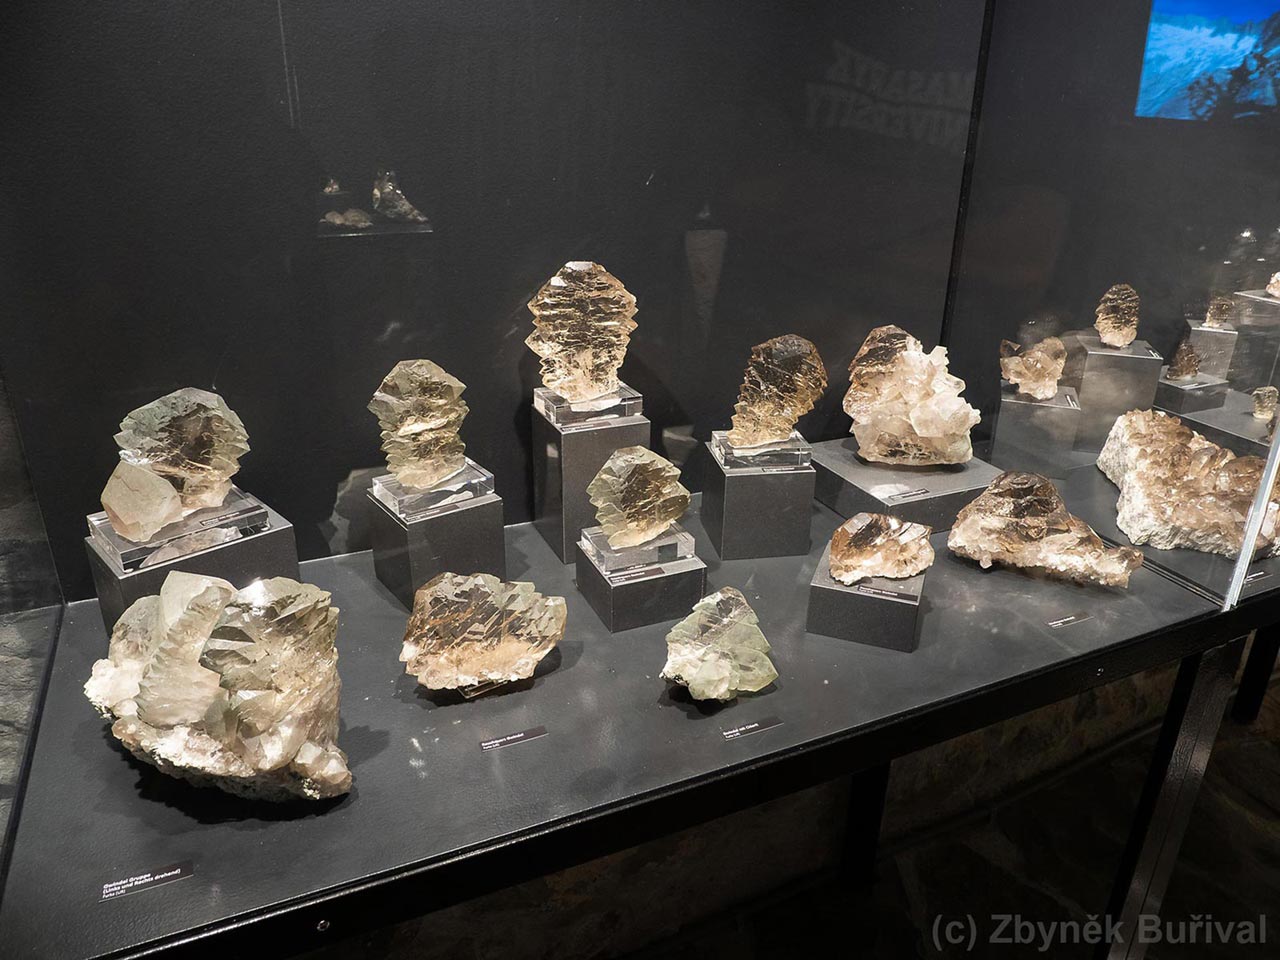 Display full of big gwindel quartz specimens from Switzerland.